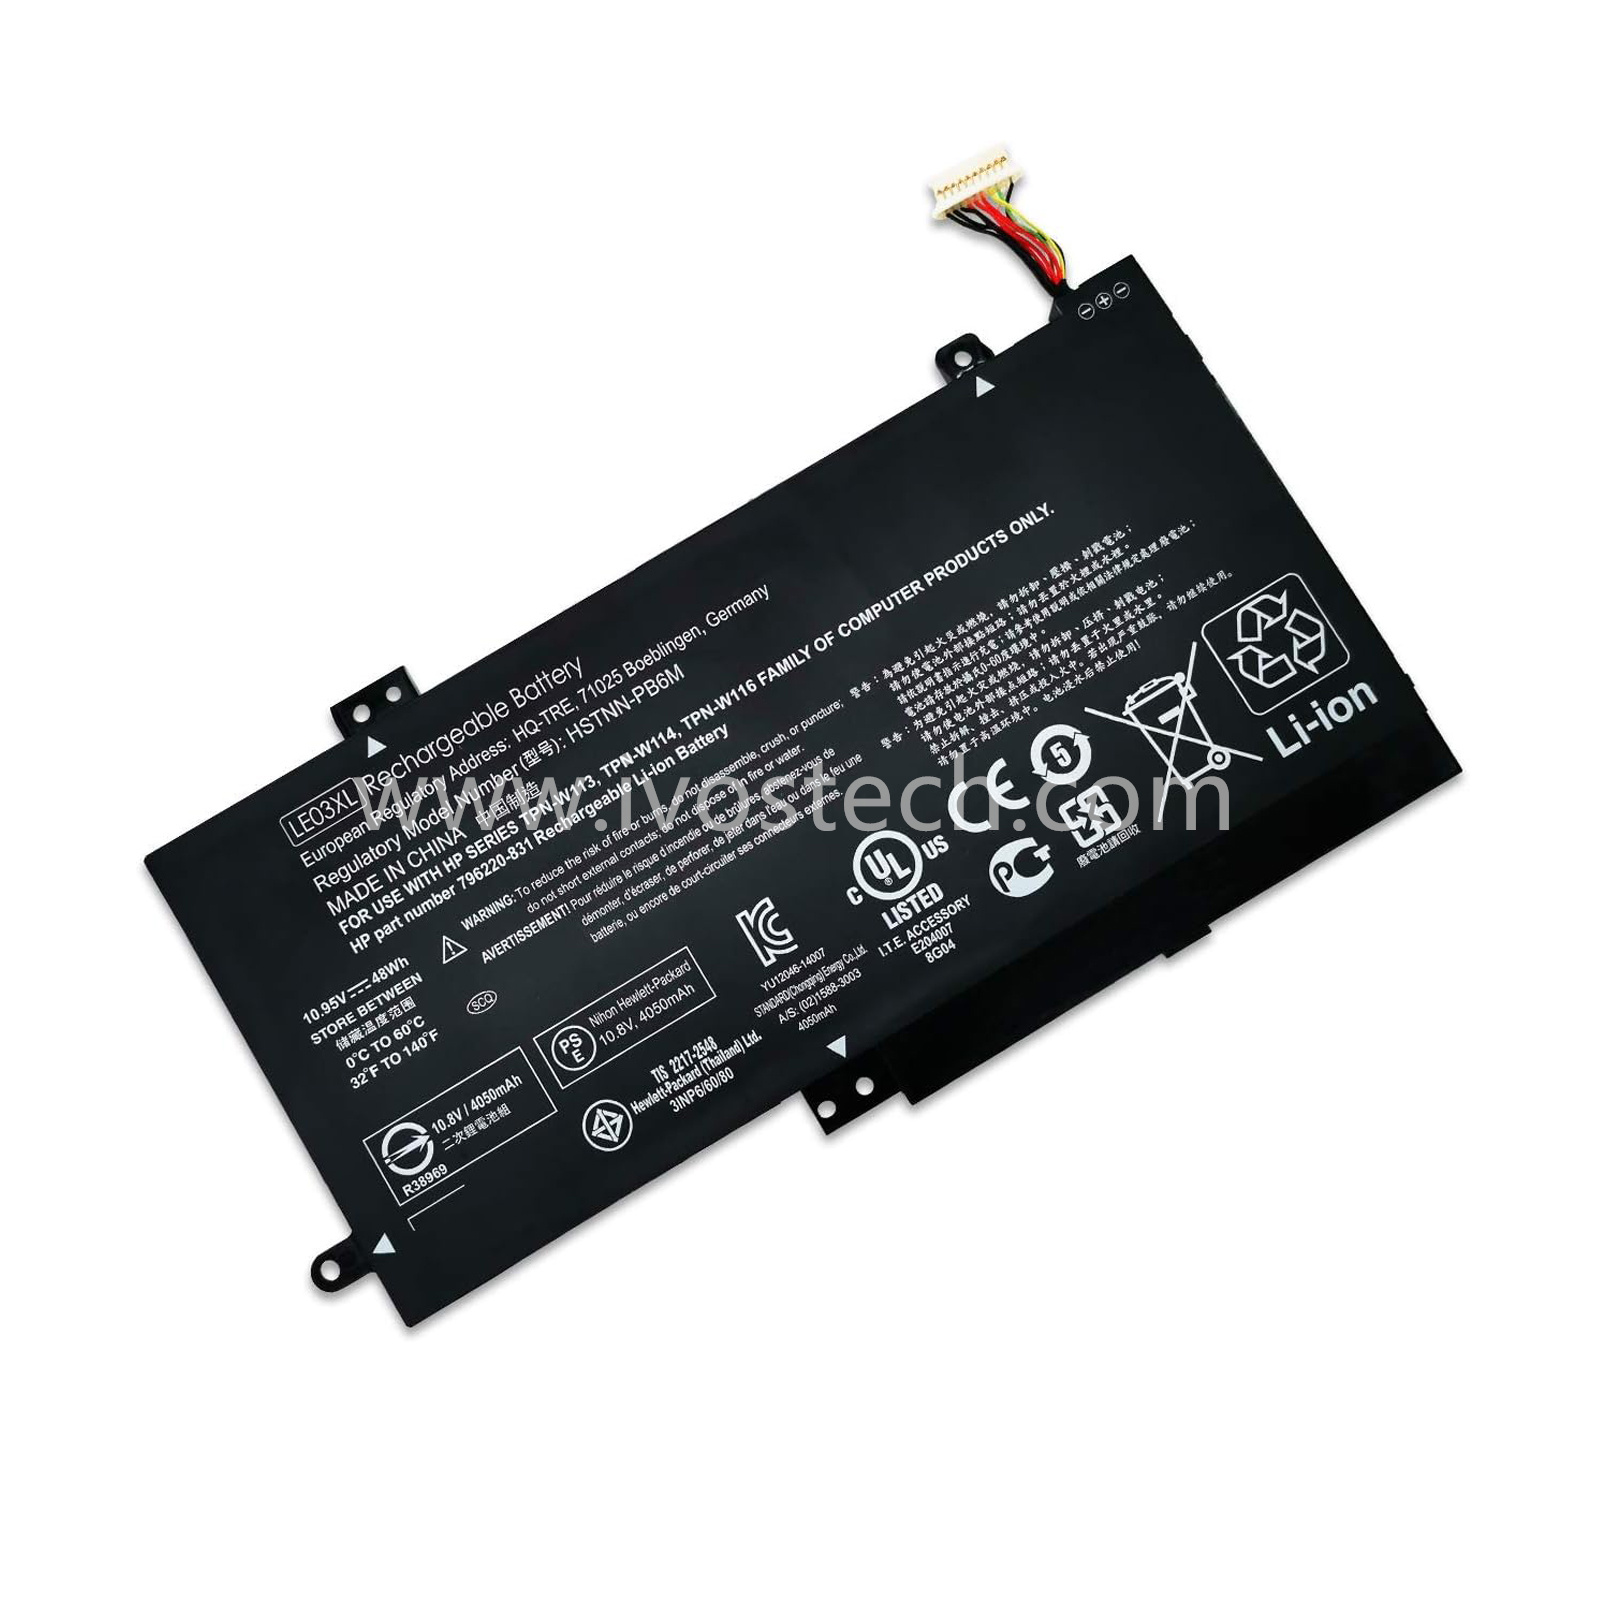 LE03XL 48Wh 11.4V Replacement Laptop Battery for HP Pavilion X360 13-s120nr Envy X360 M6-W101dx Series